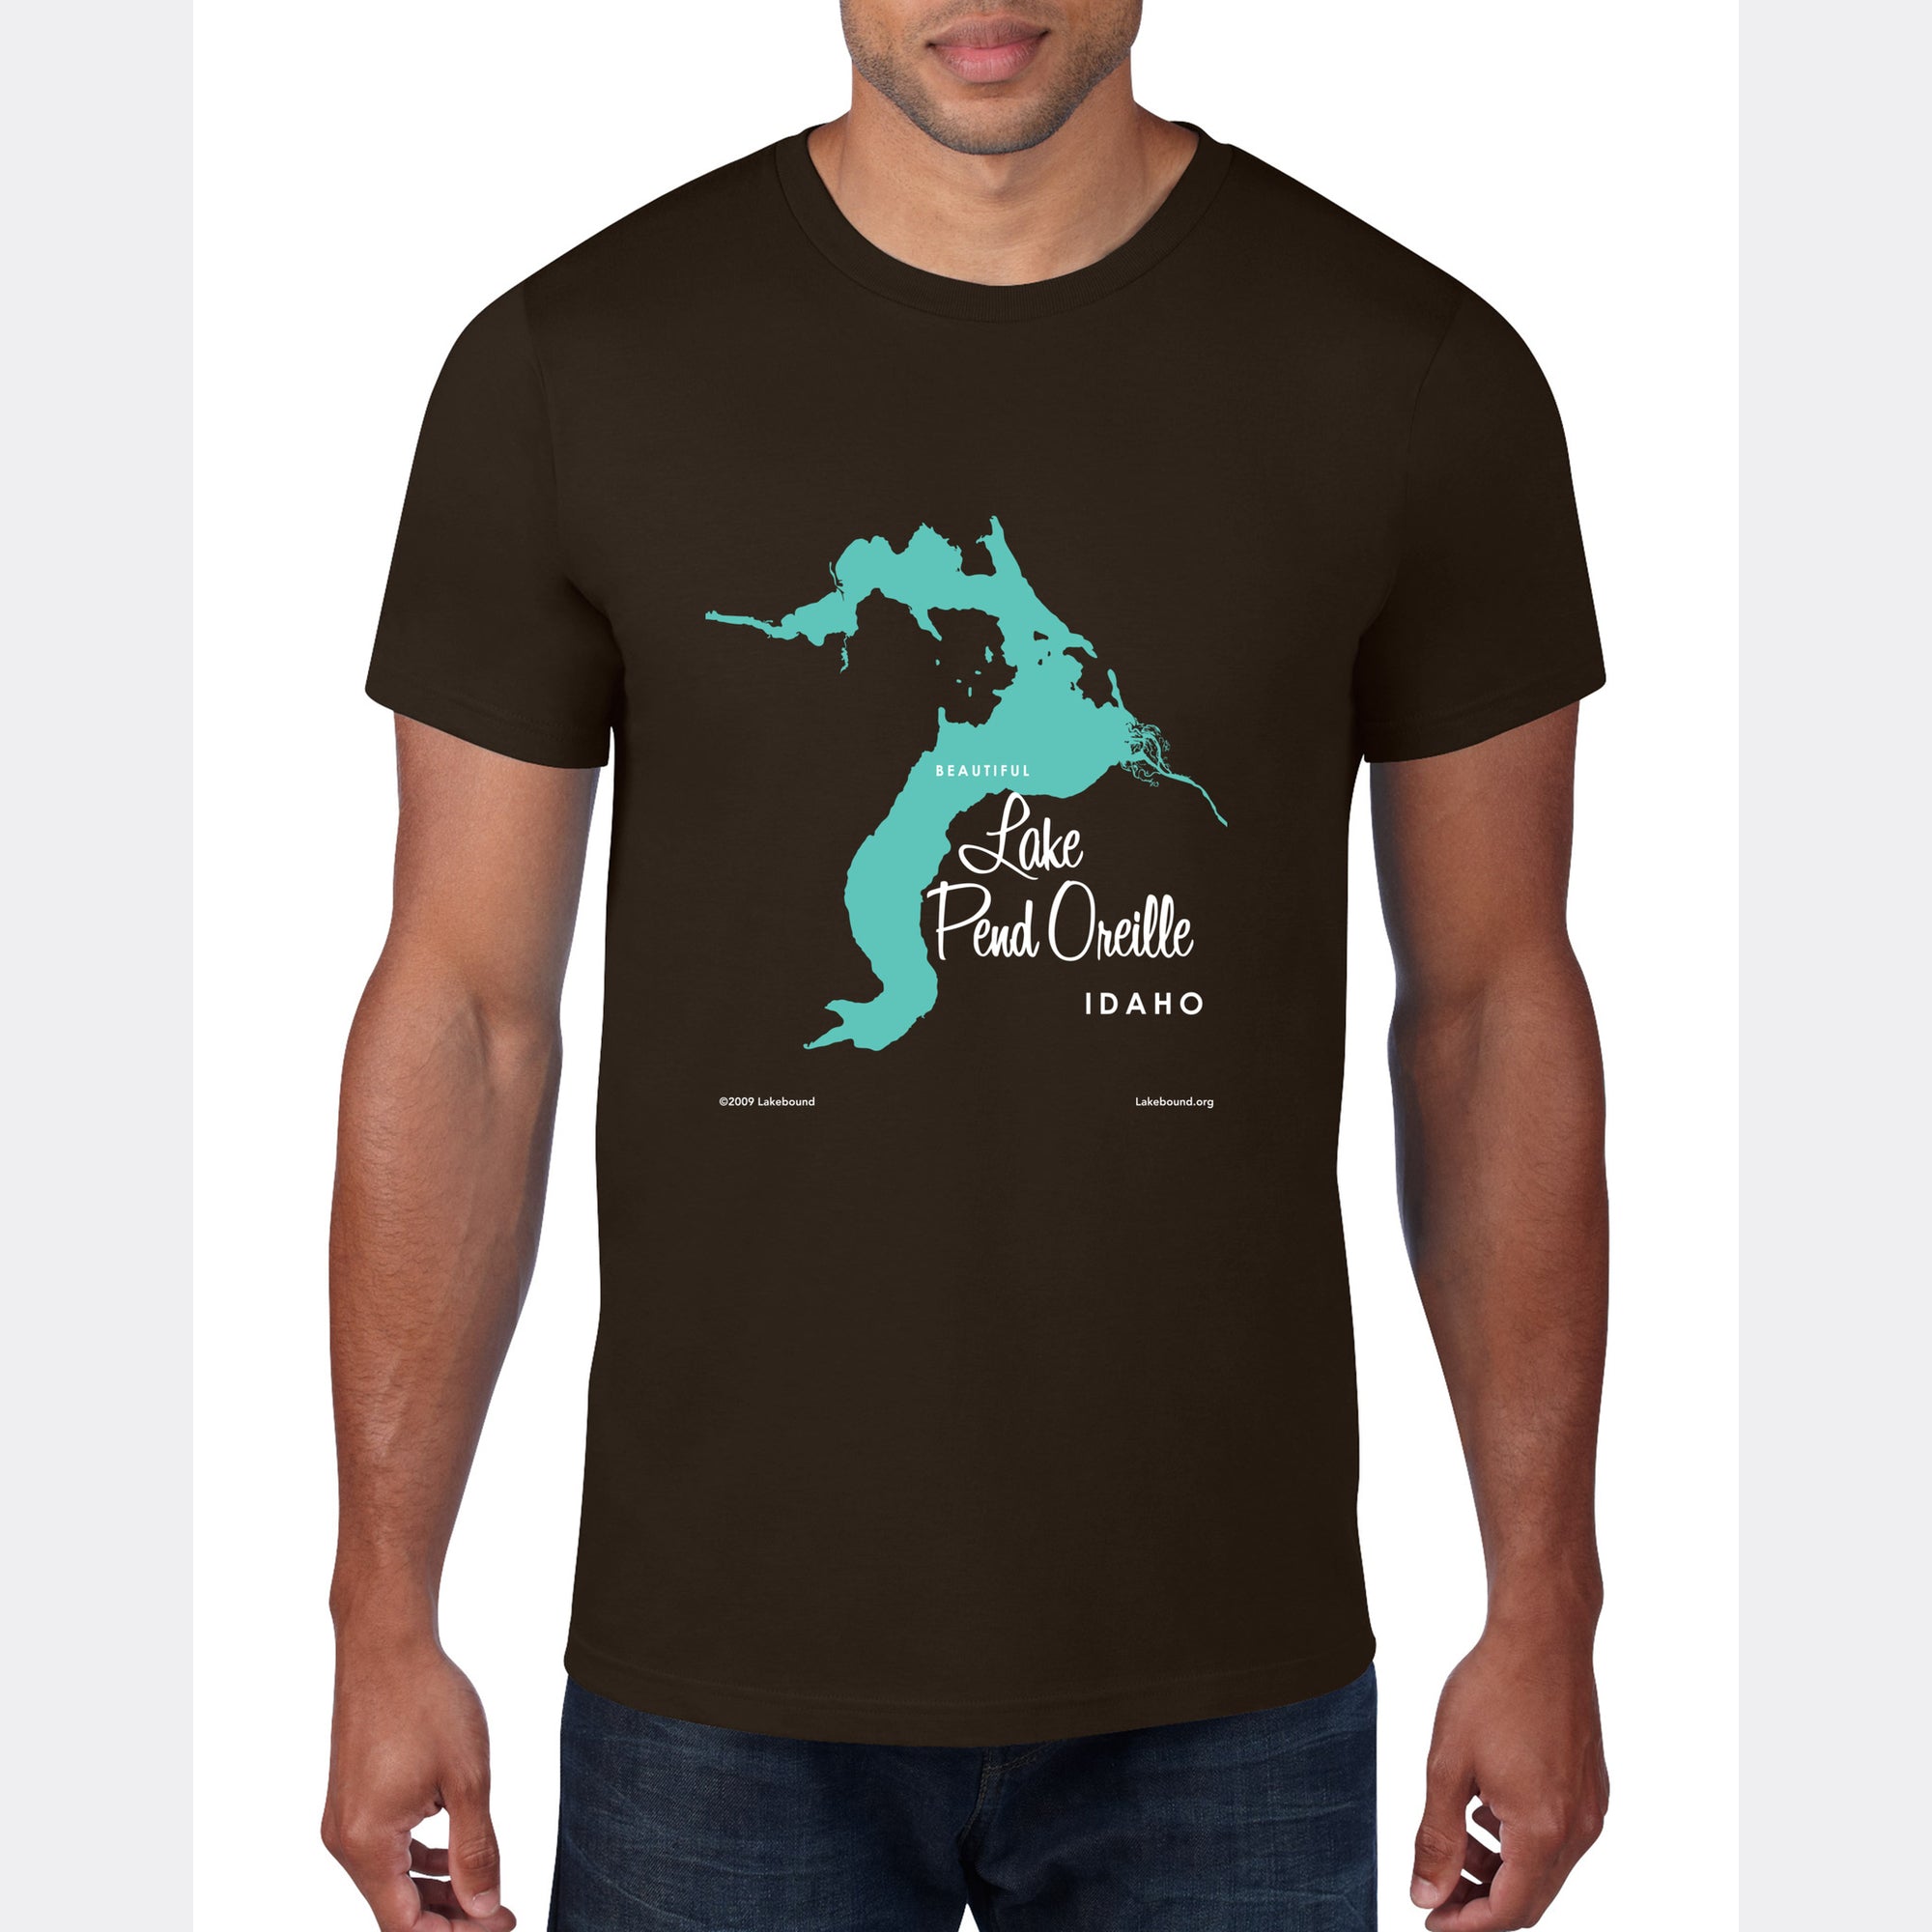 Lake Pend Oreille Idaho, T-Shirt